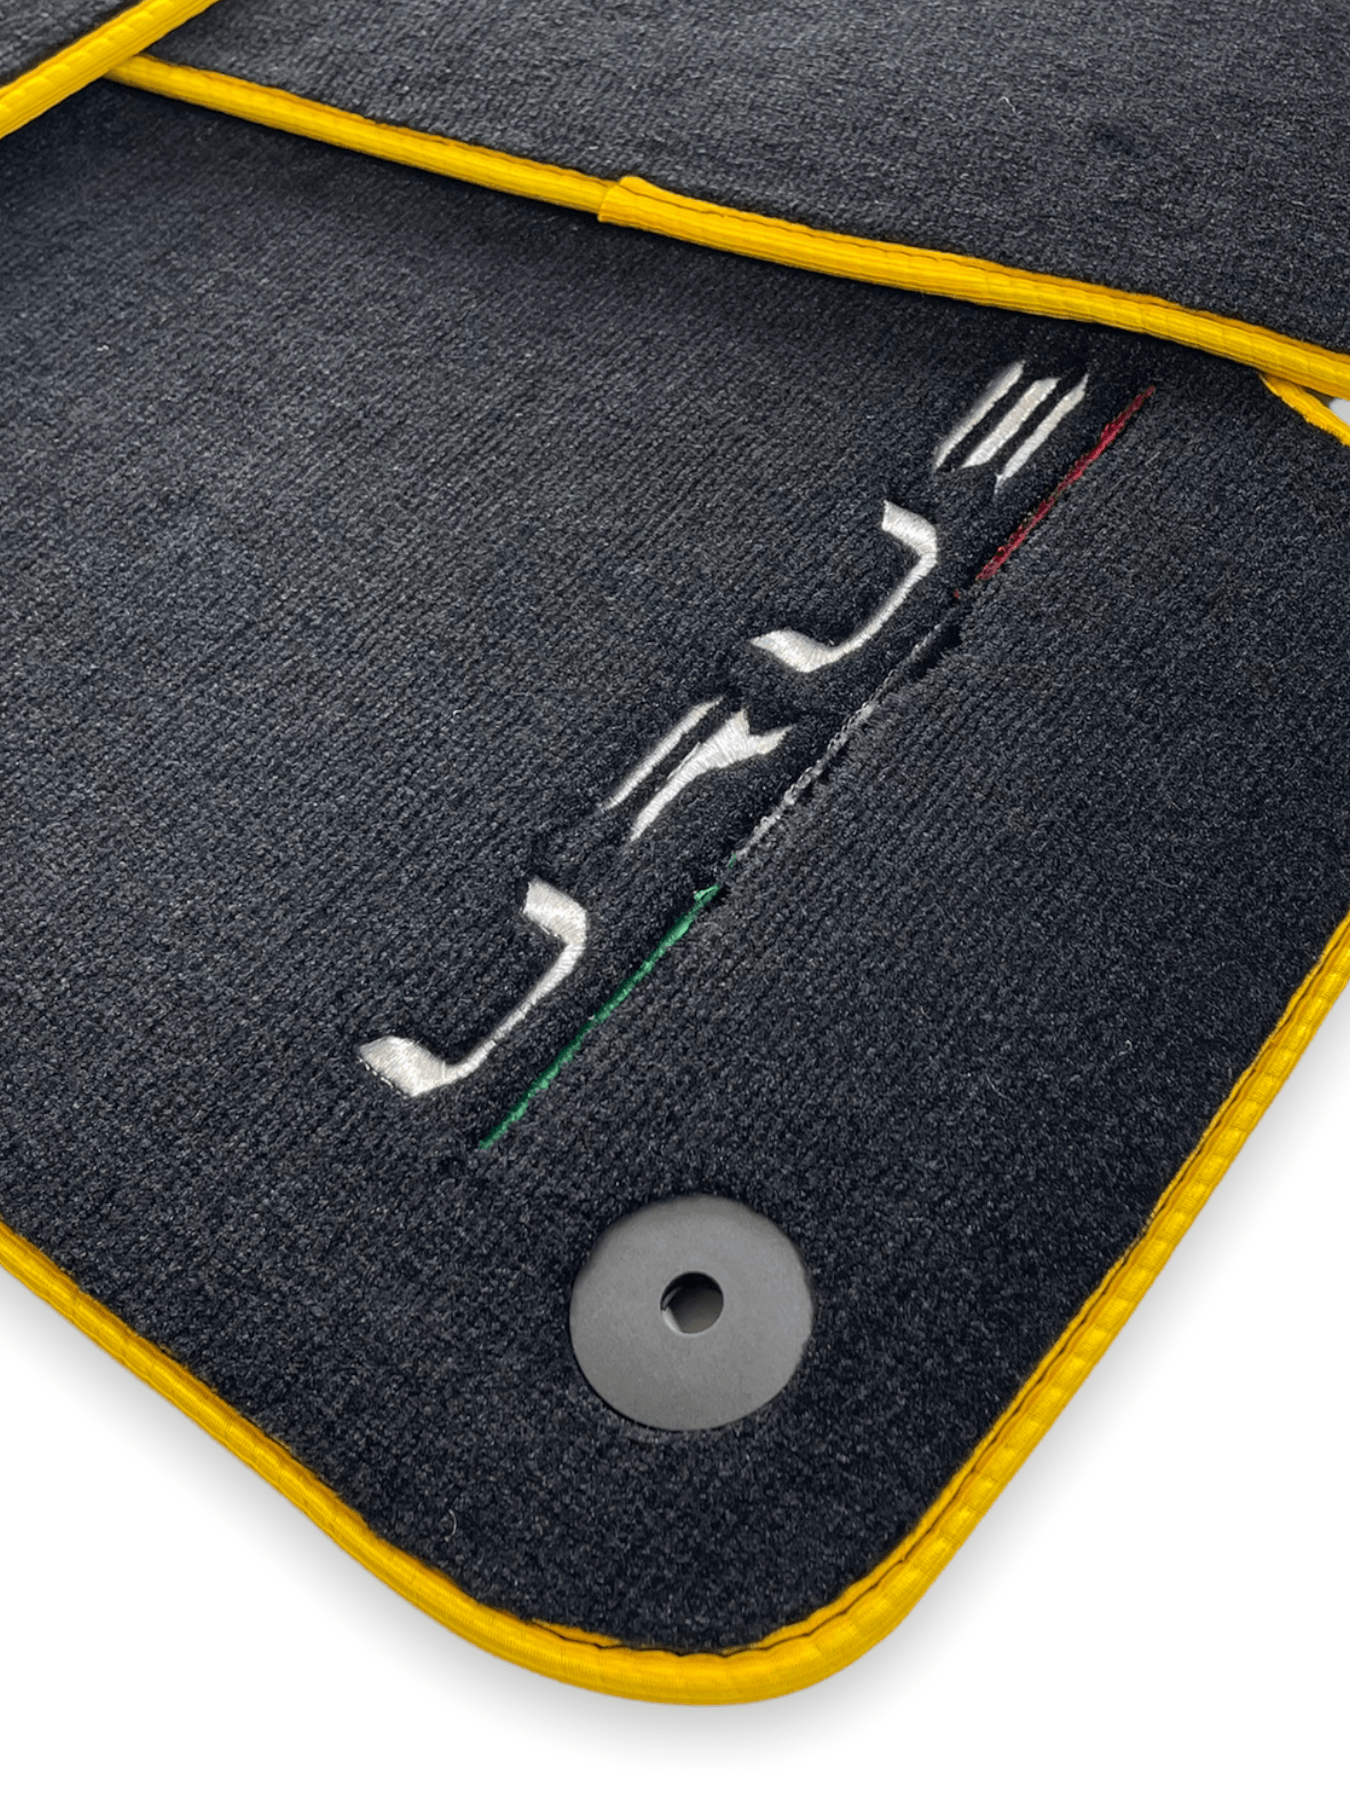 Floor Mats For Lamborghini Urus Black Tailored With Yellow Trim - AutoWin